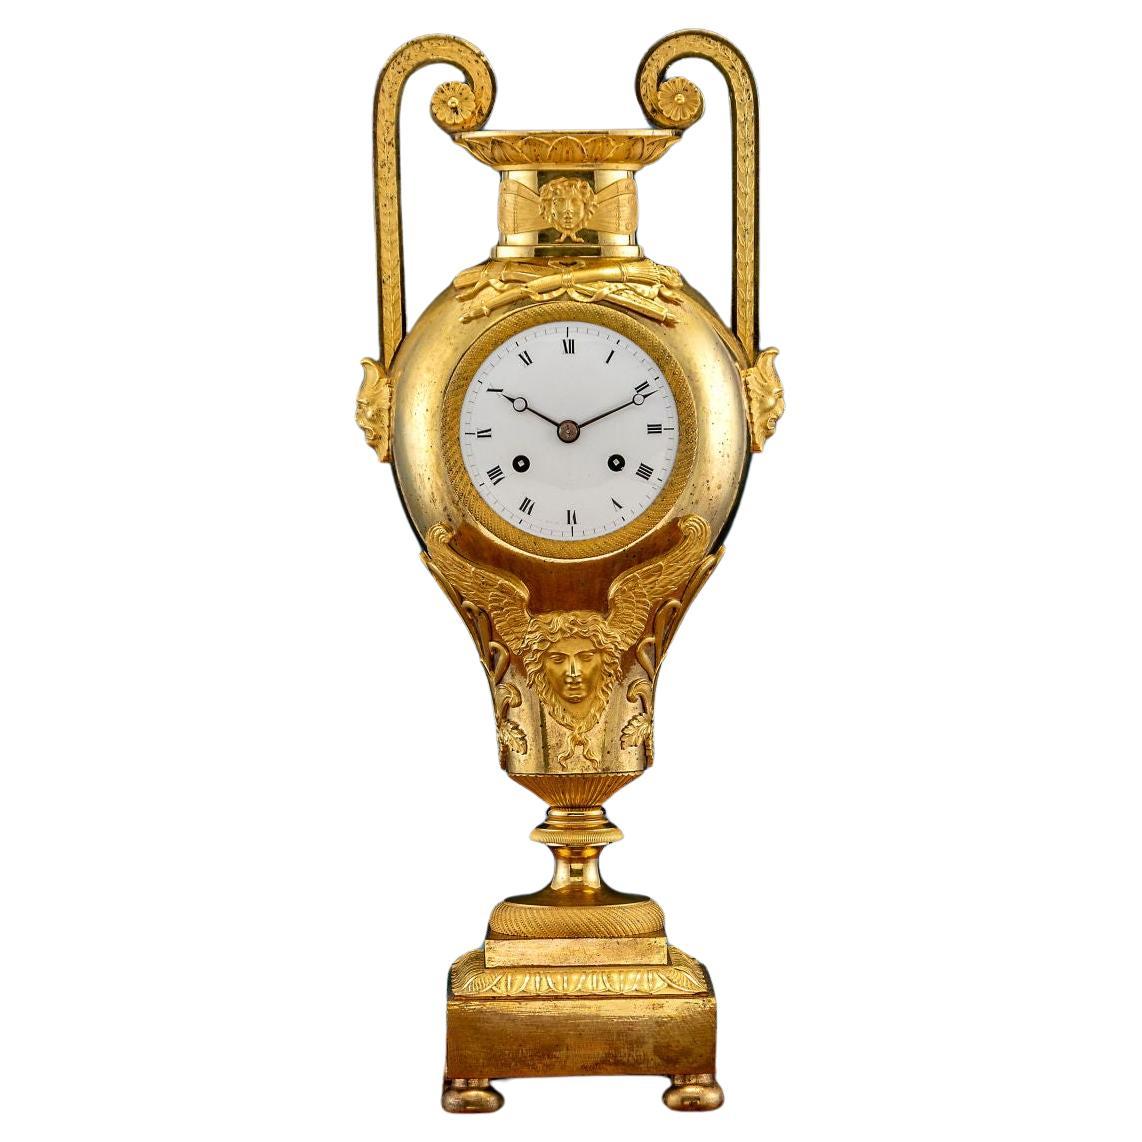 Vase Clock France First Quarter 19th Century